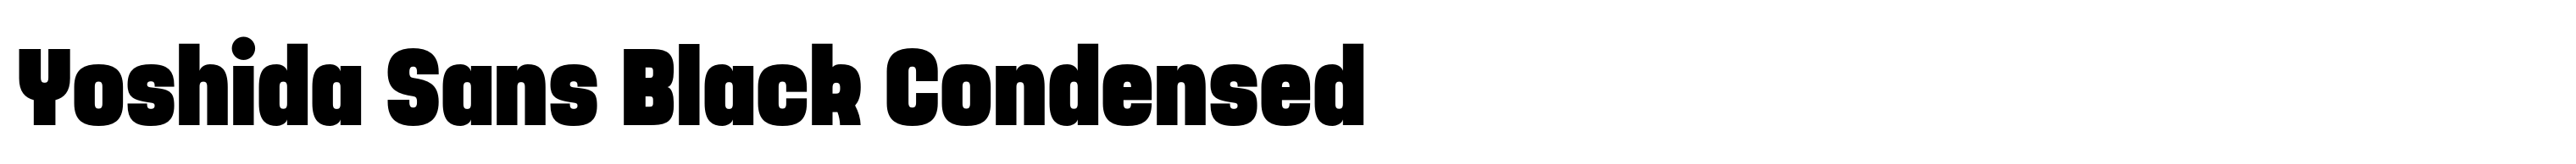 Yoshida Sans Black Condensed